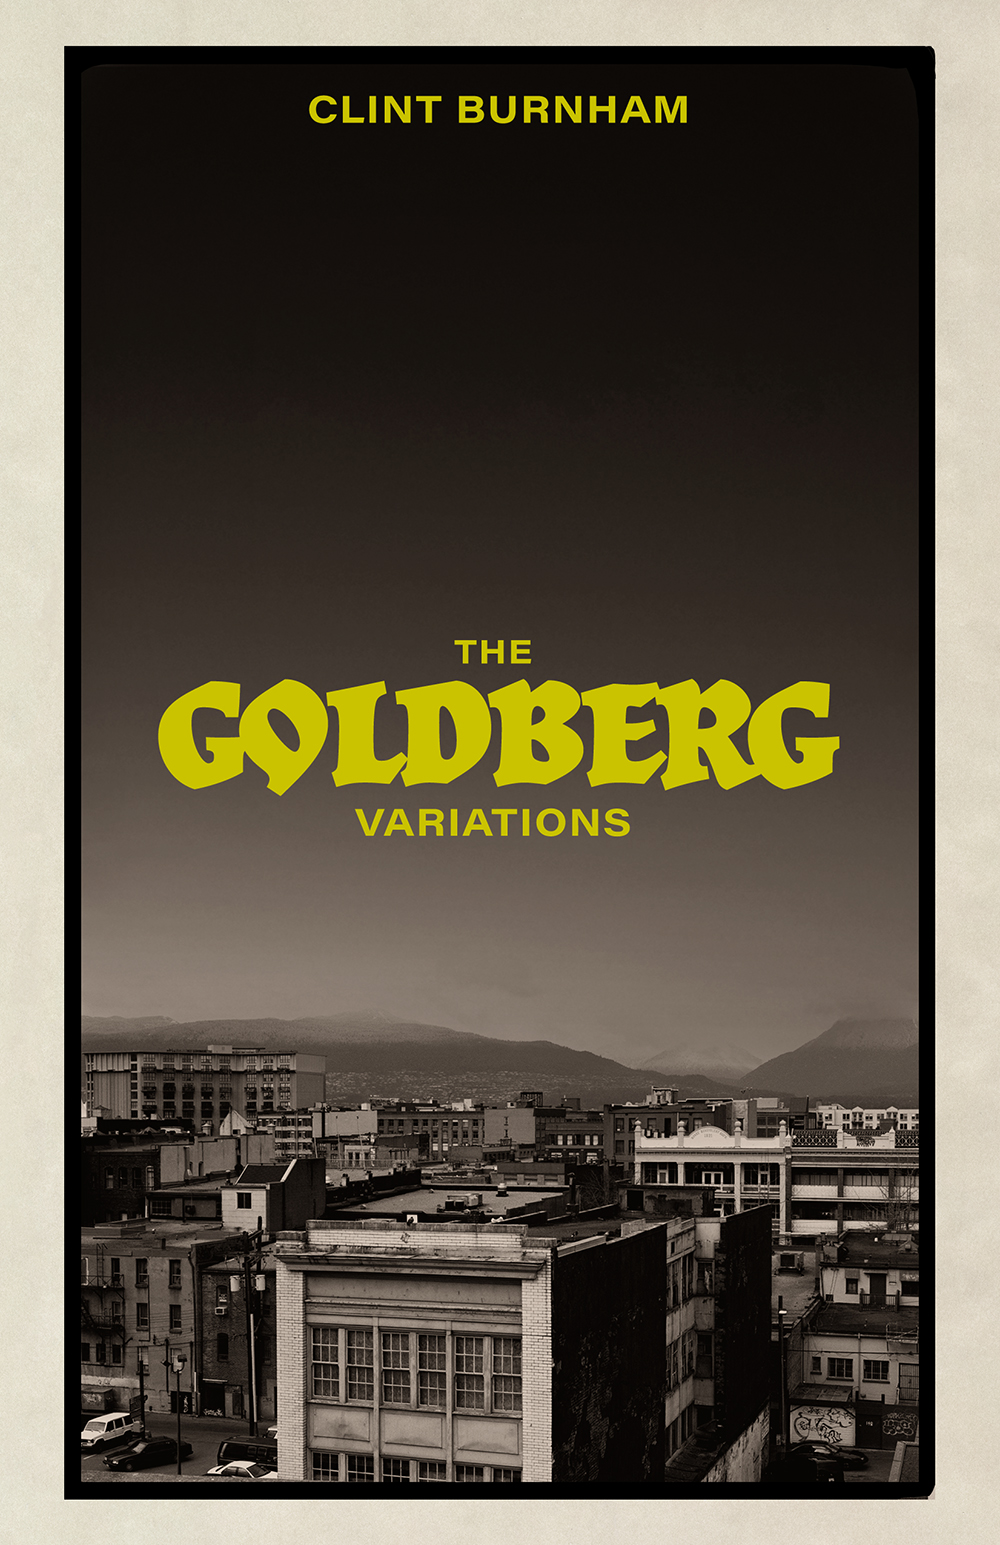 The Goldberg Variations by Clint Burnham